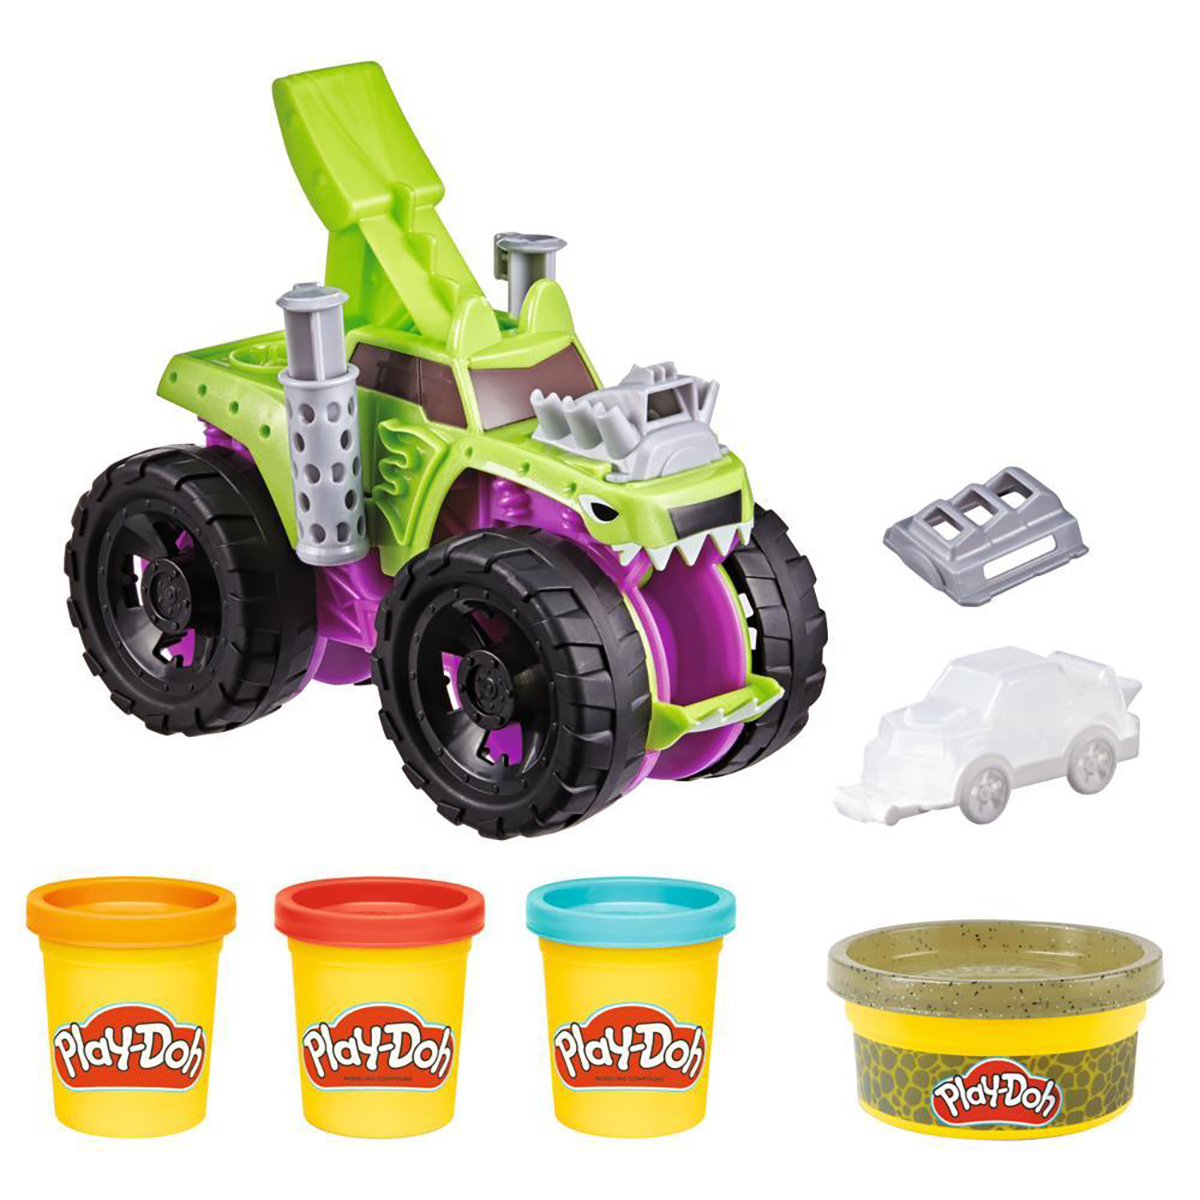 Play-Doh(R) Chompin' Monster Truck